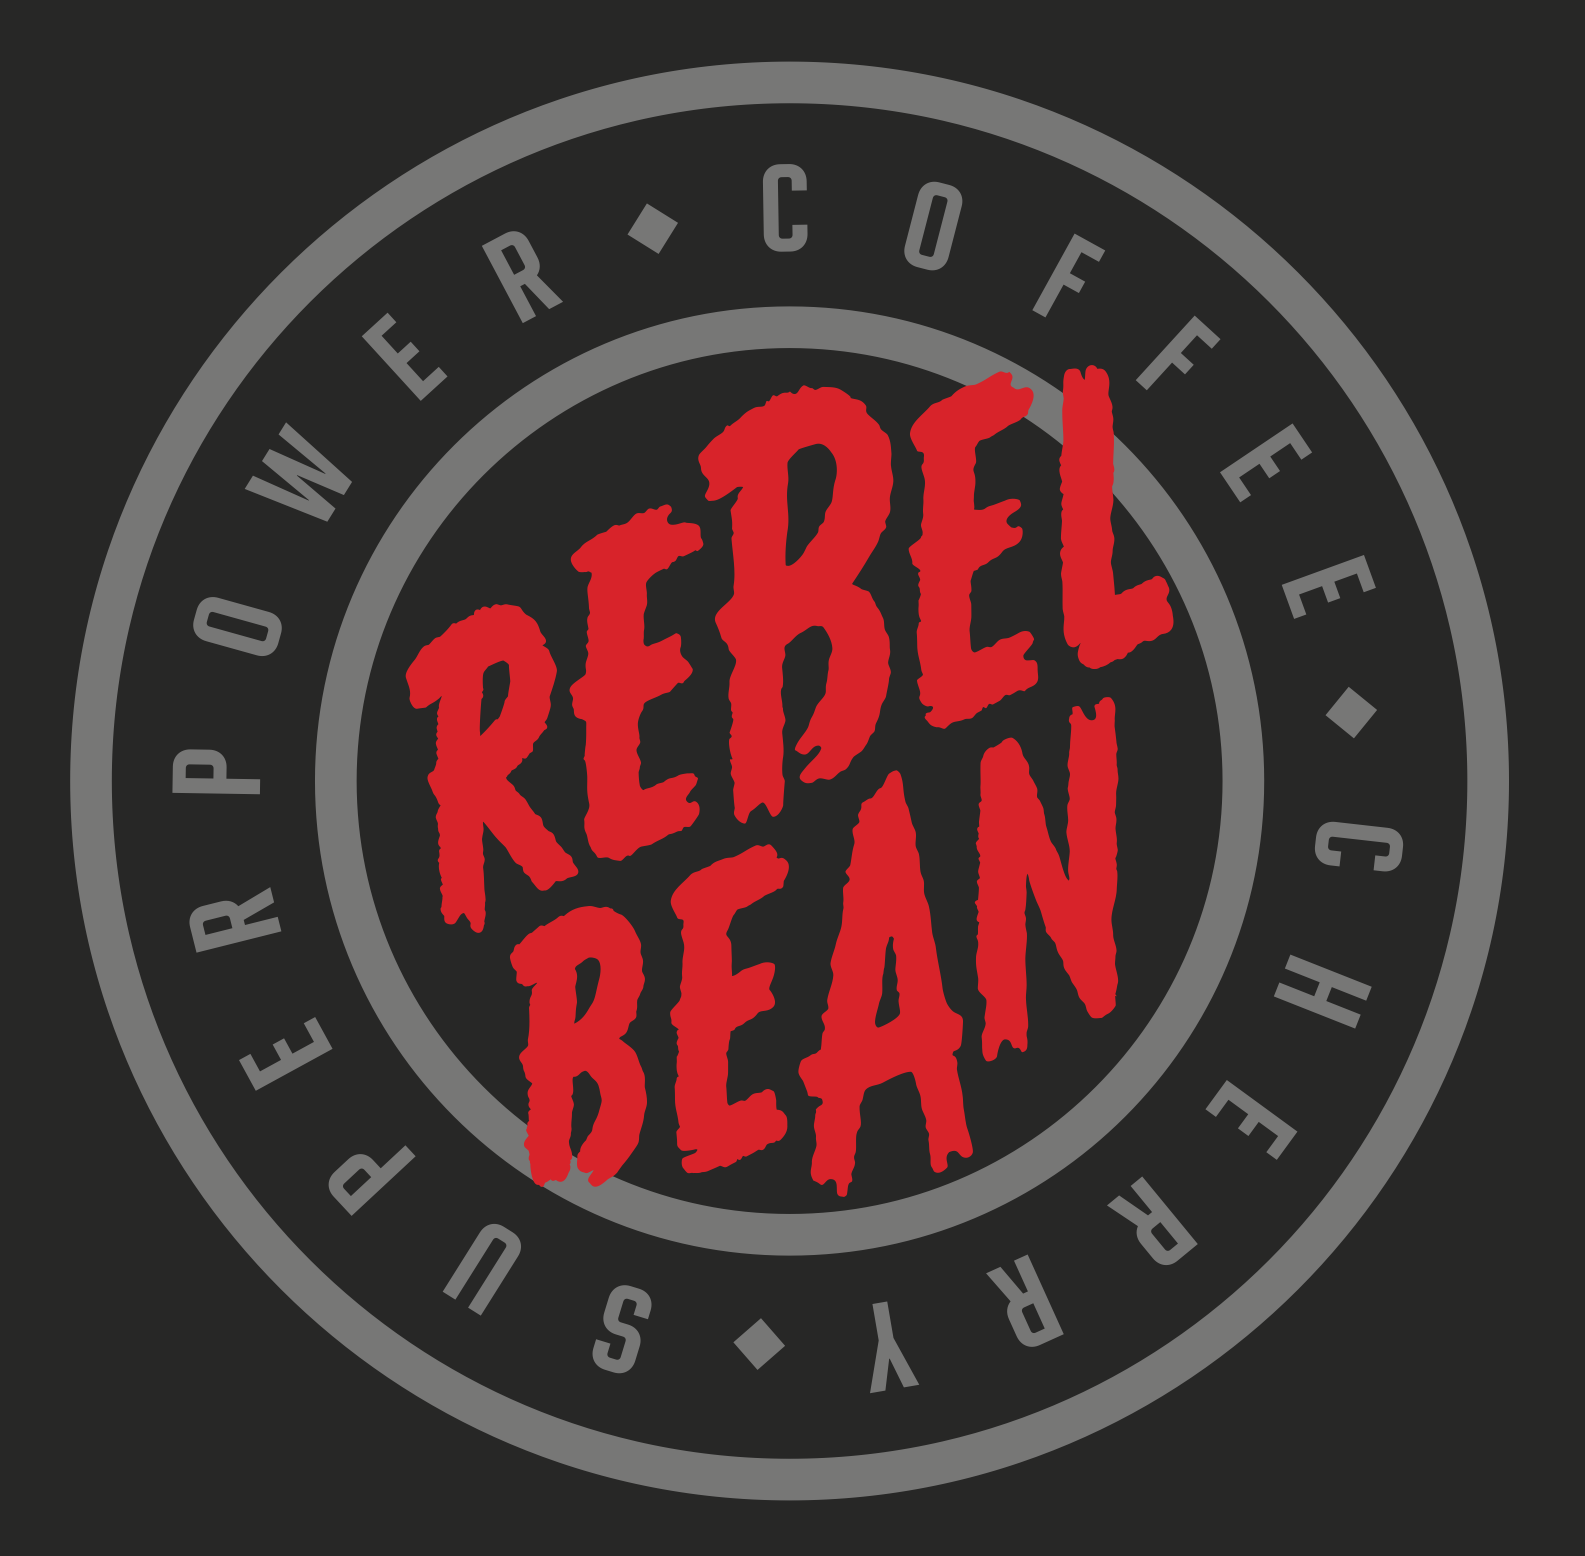 Rebel beans